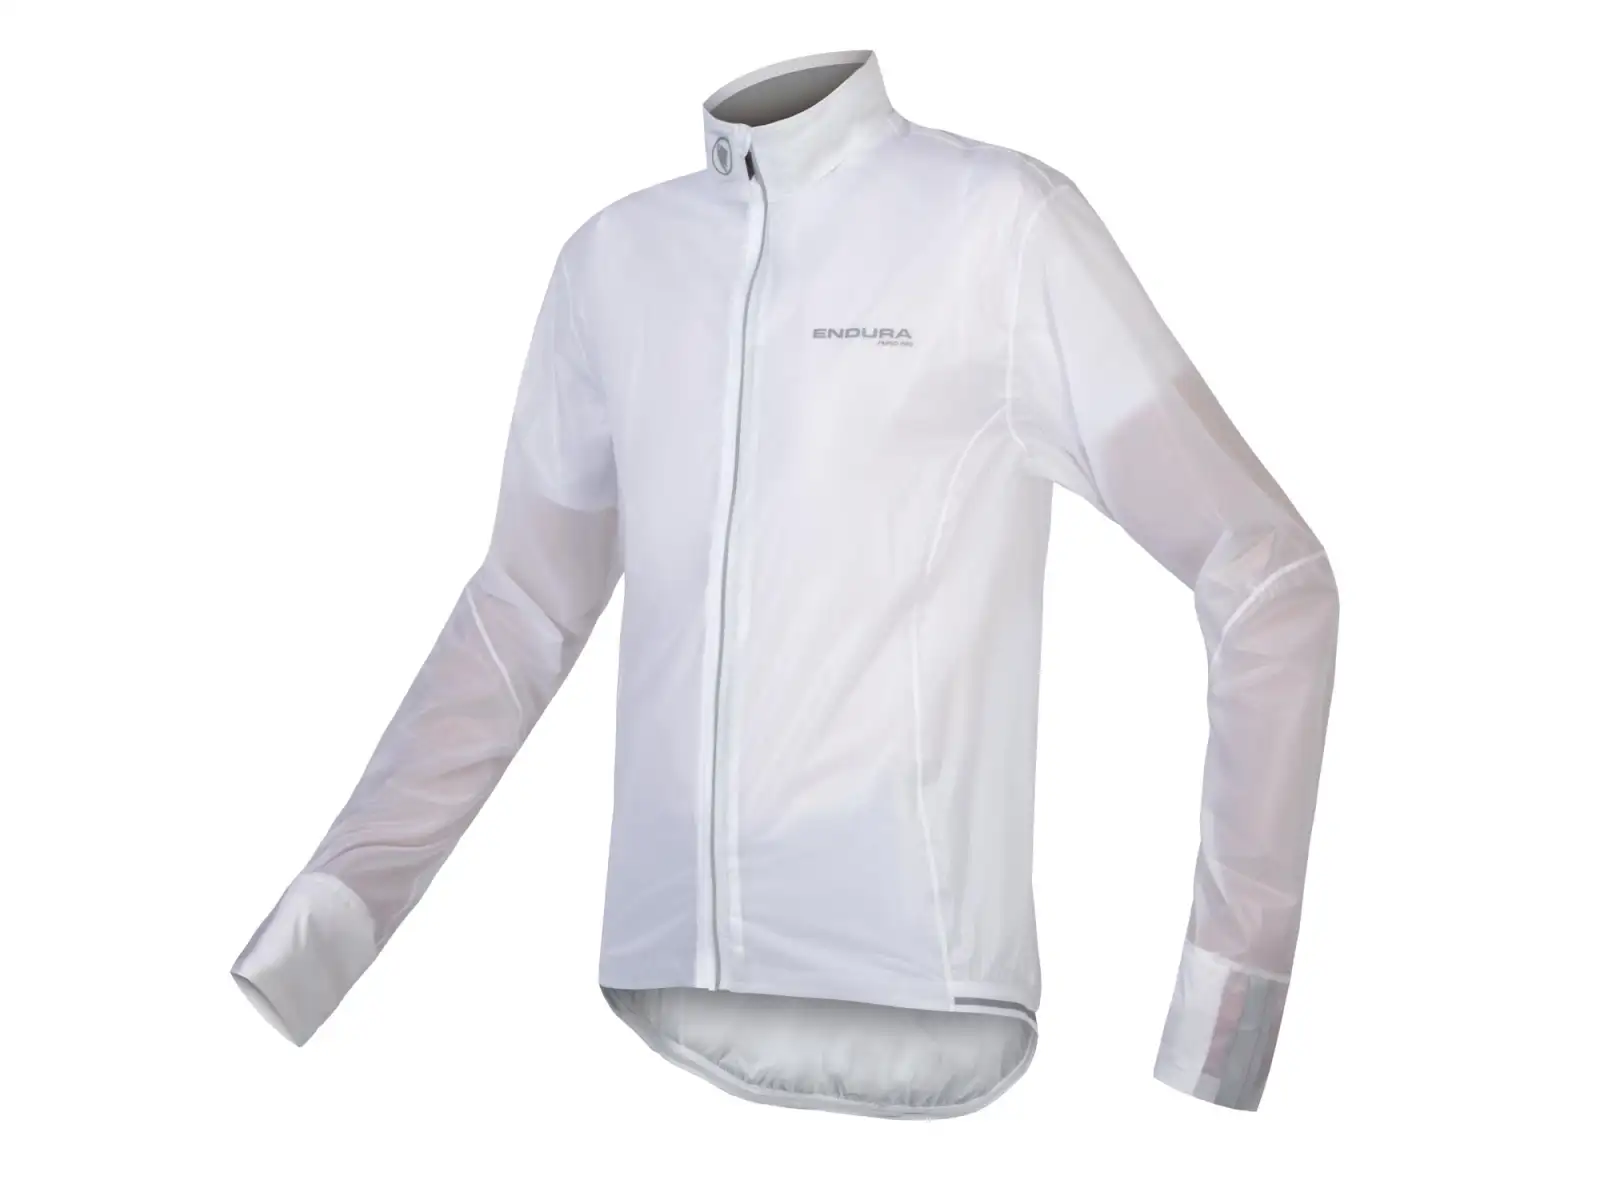 Endura FS260-Pro Adrenaline Race Cape II Jacket white